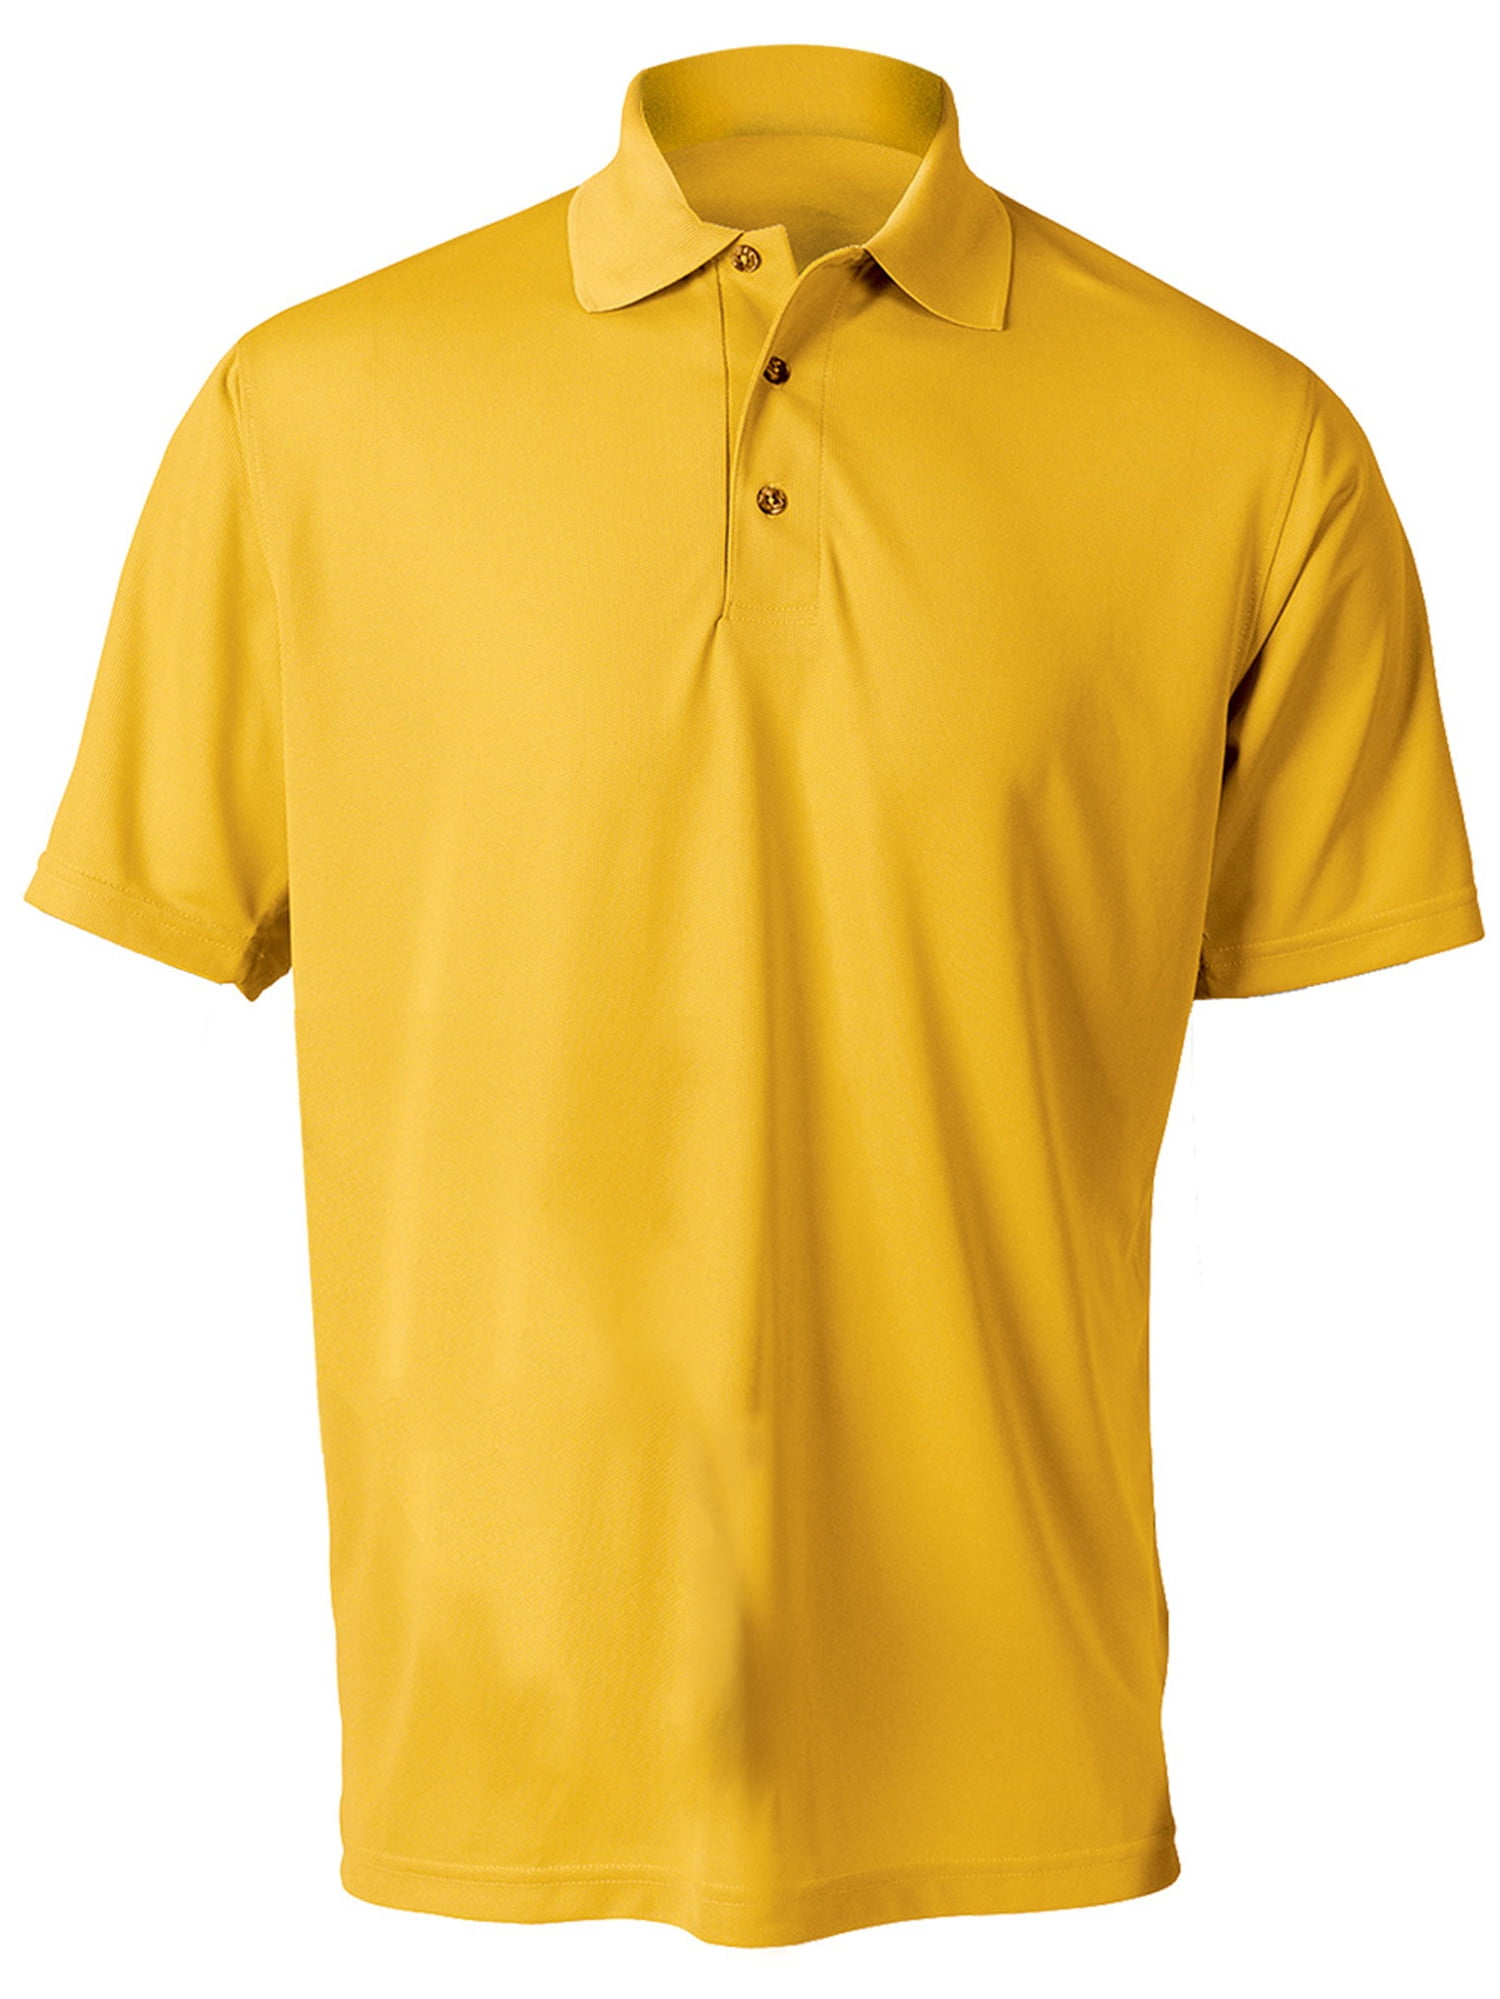 Paragon Products - Paragon Men's Performance Mesh Polo Shirt - Walmart ...